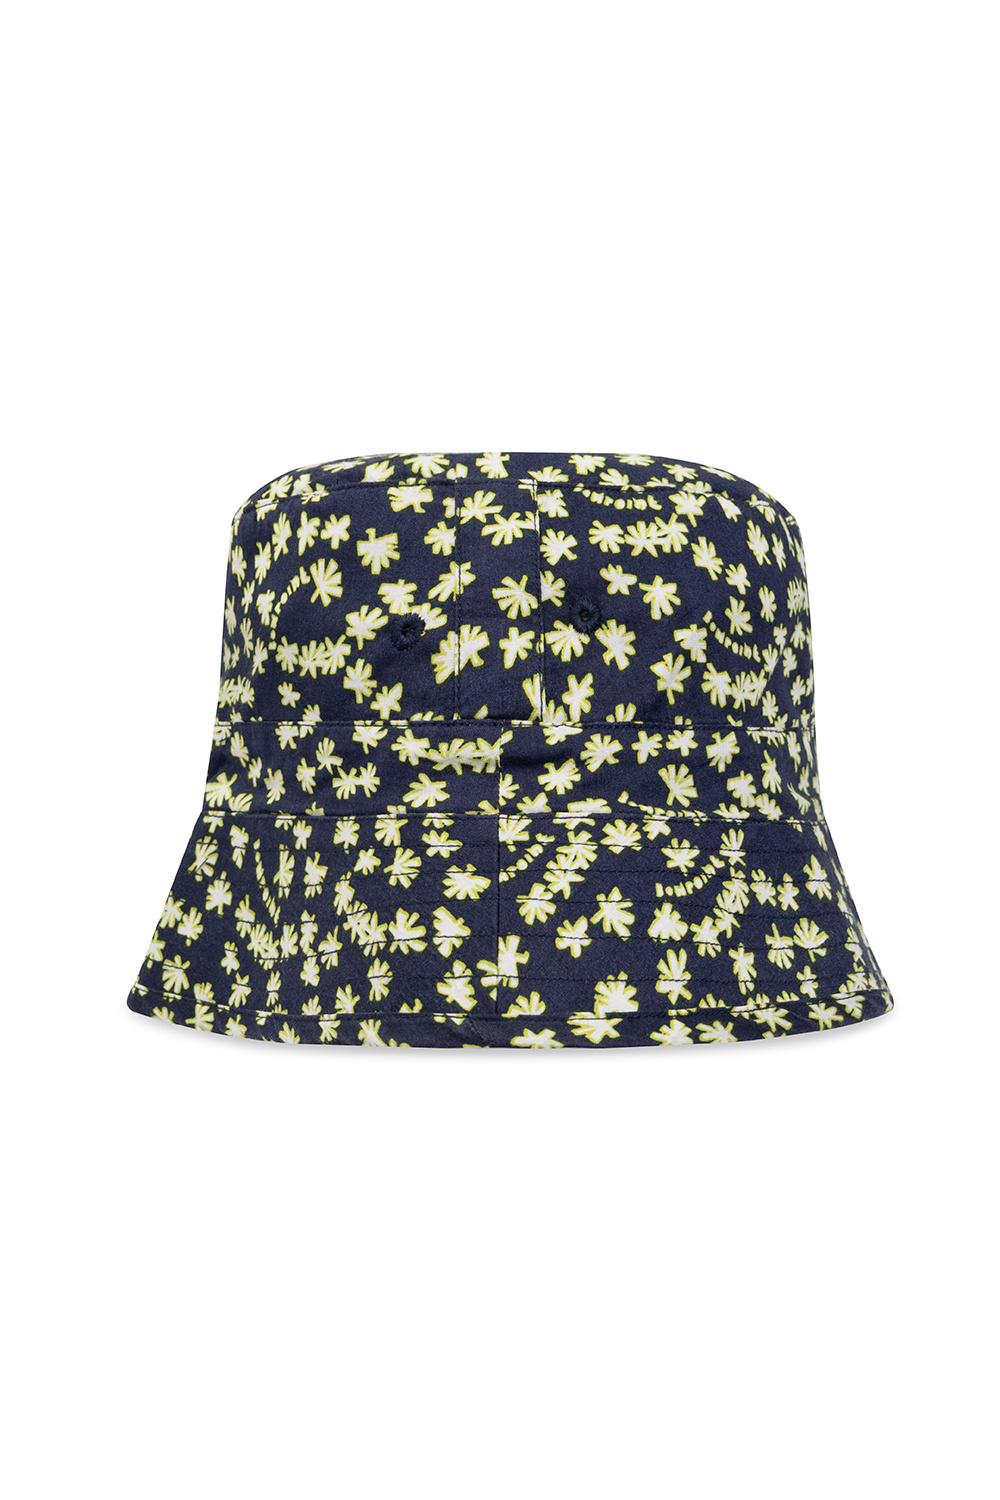 Bonpoint  Bucket hat Unisex with floral motif